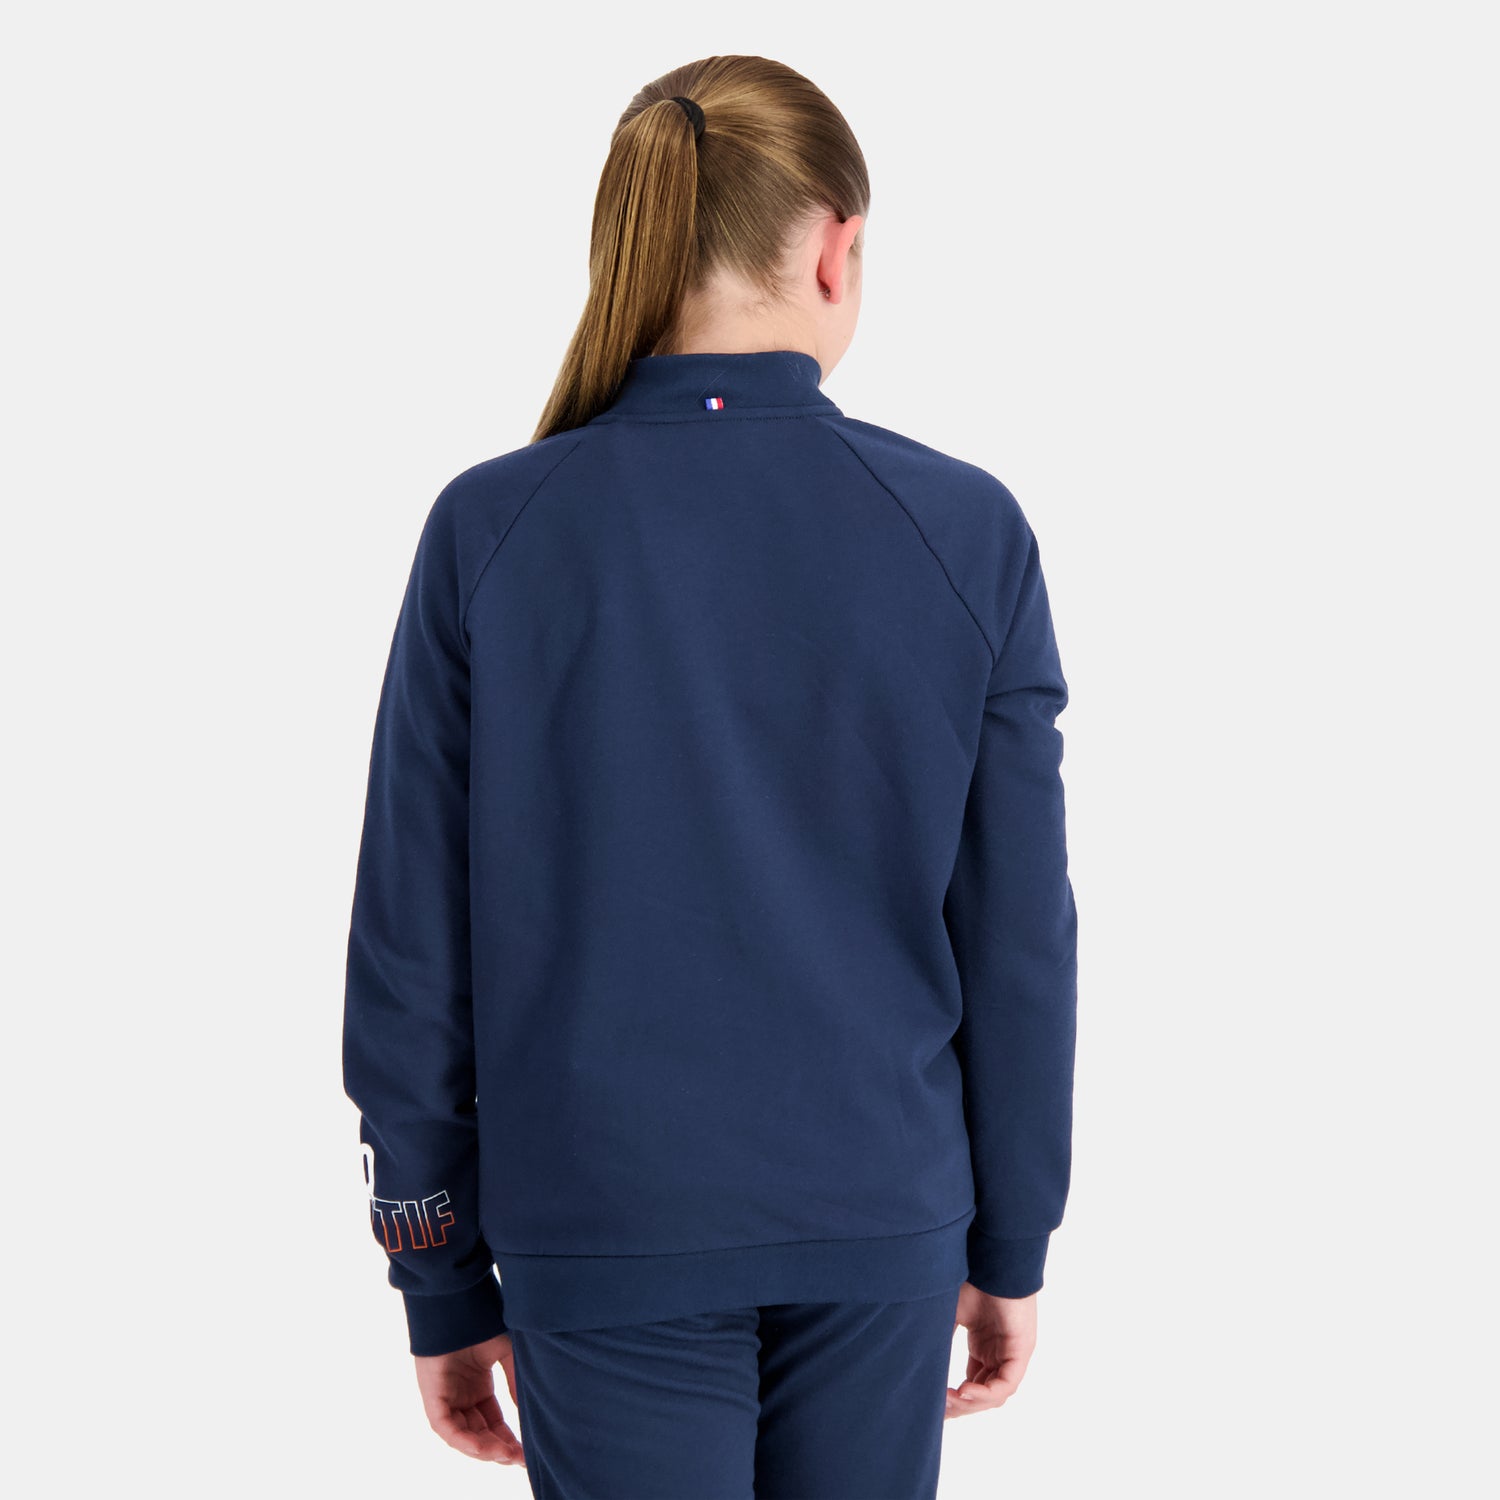 2410129-SAISON 2 FZ Sweat N°1 Enfant dress blues  | Sweatshirt für Kinder